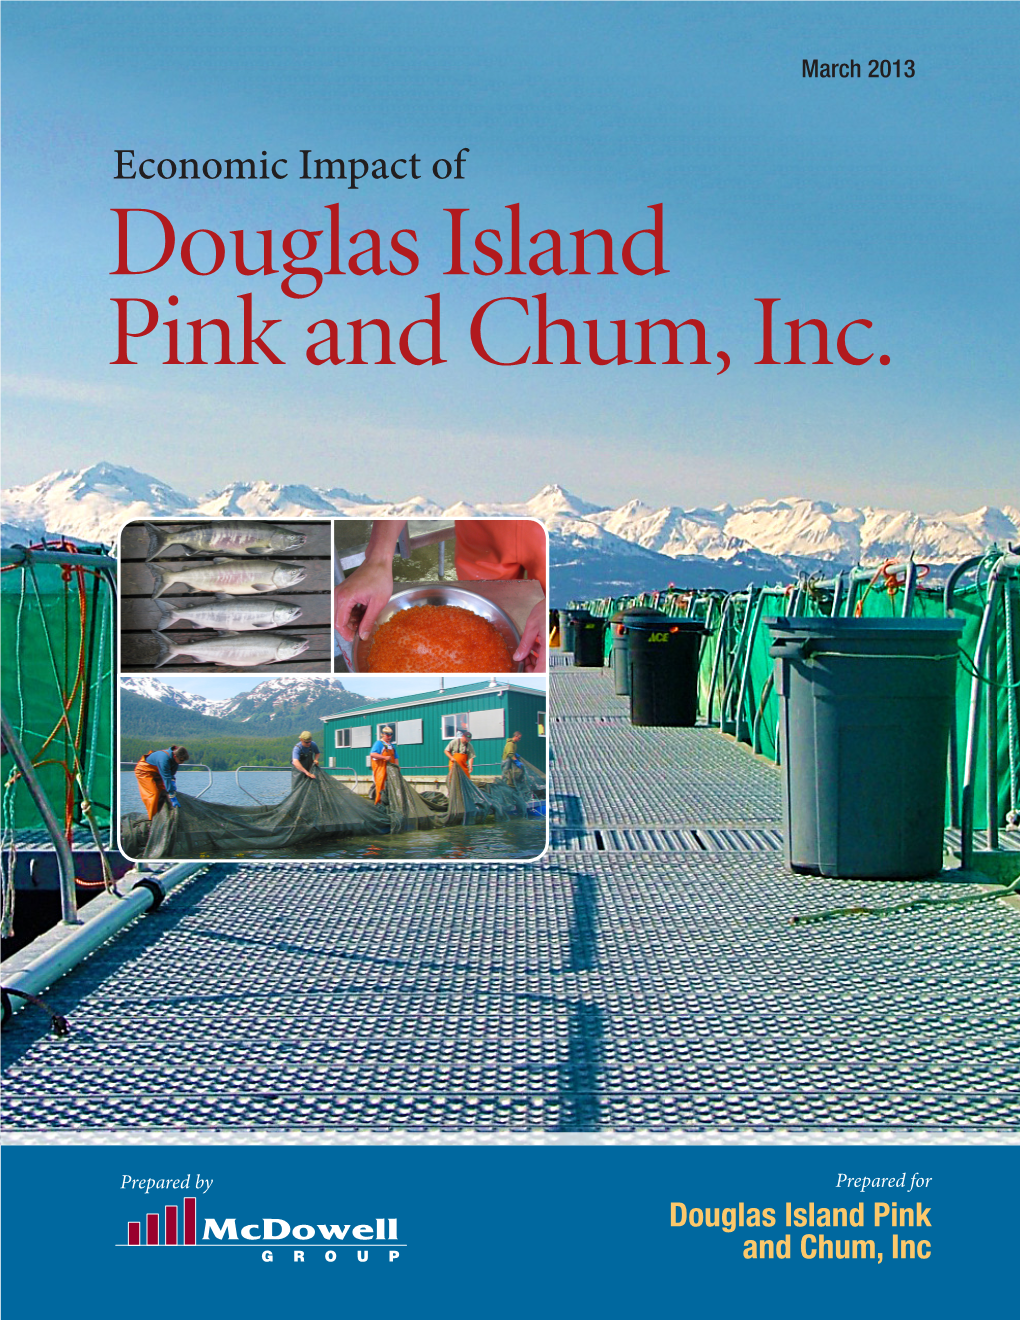 Douglas Island Pink and Chum, Inc